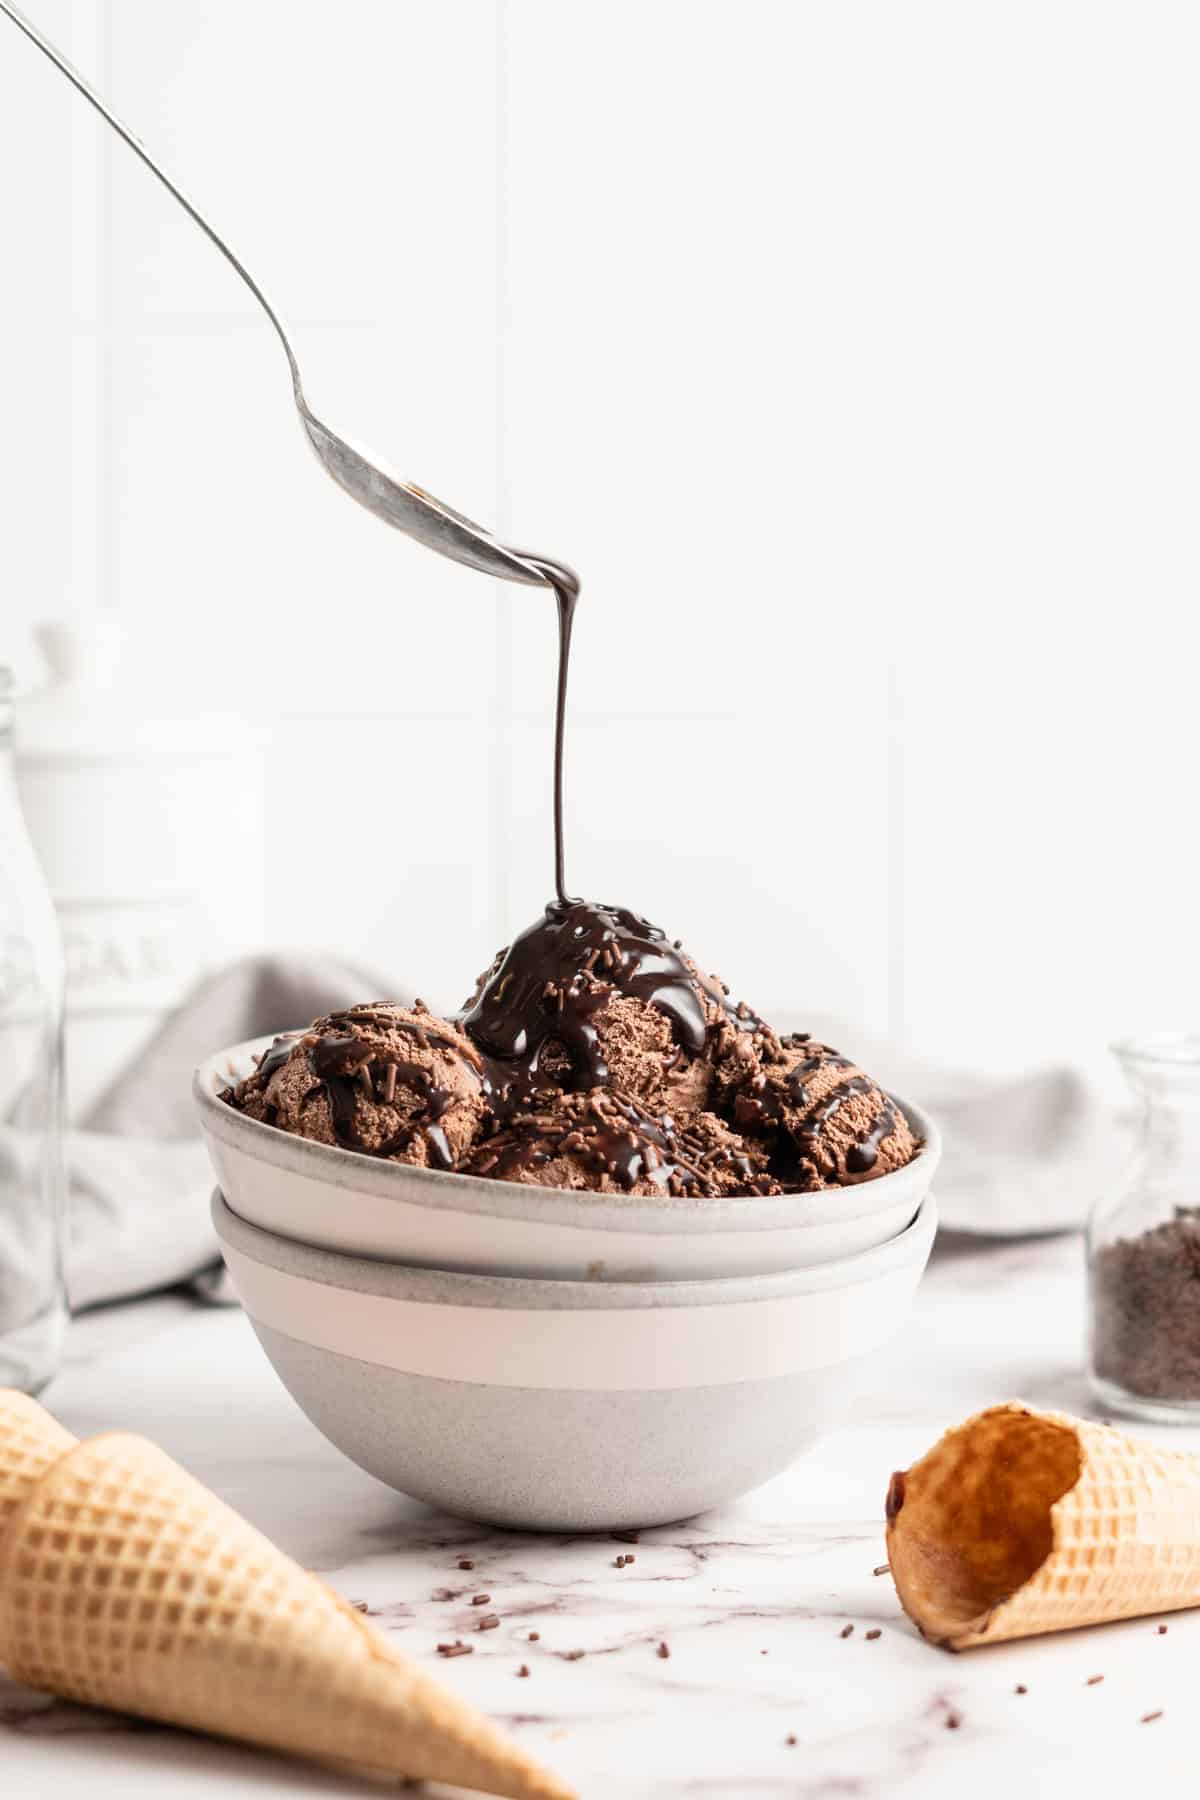 Chocolate syrup drizzled onto bowl of Chocolate Avocado Ice Cream